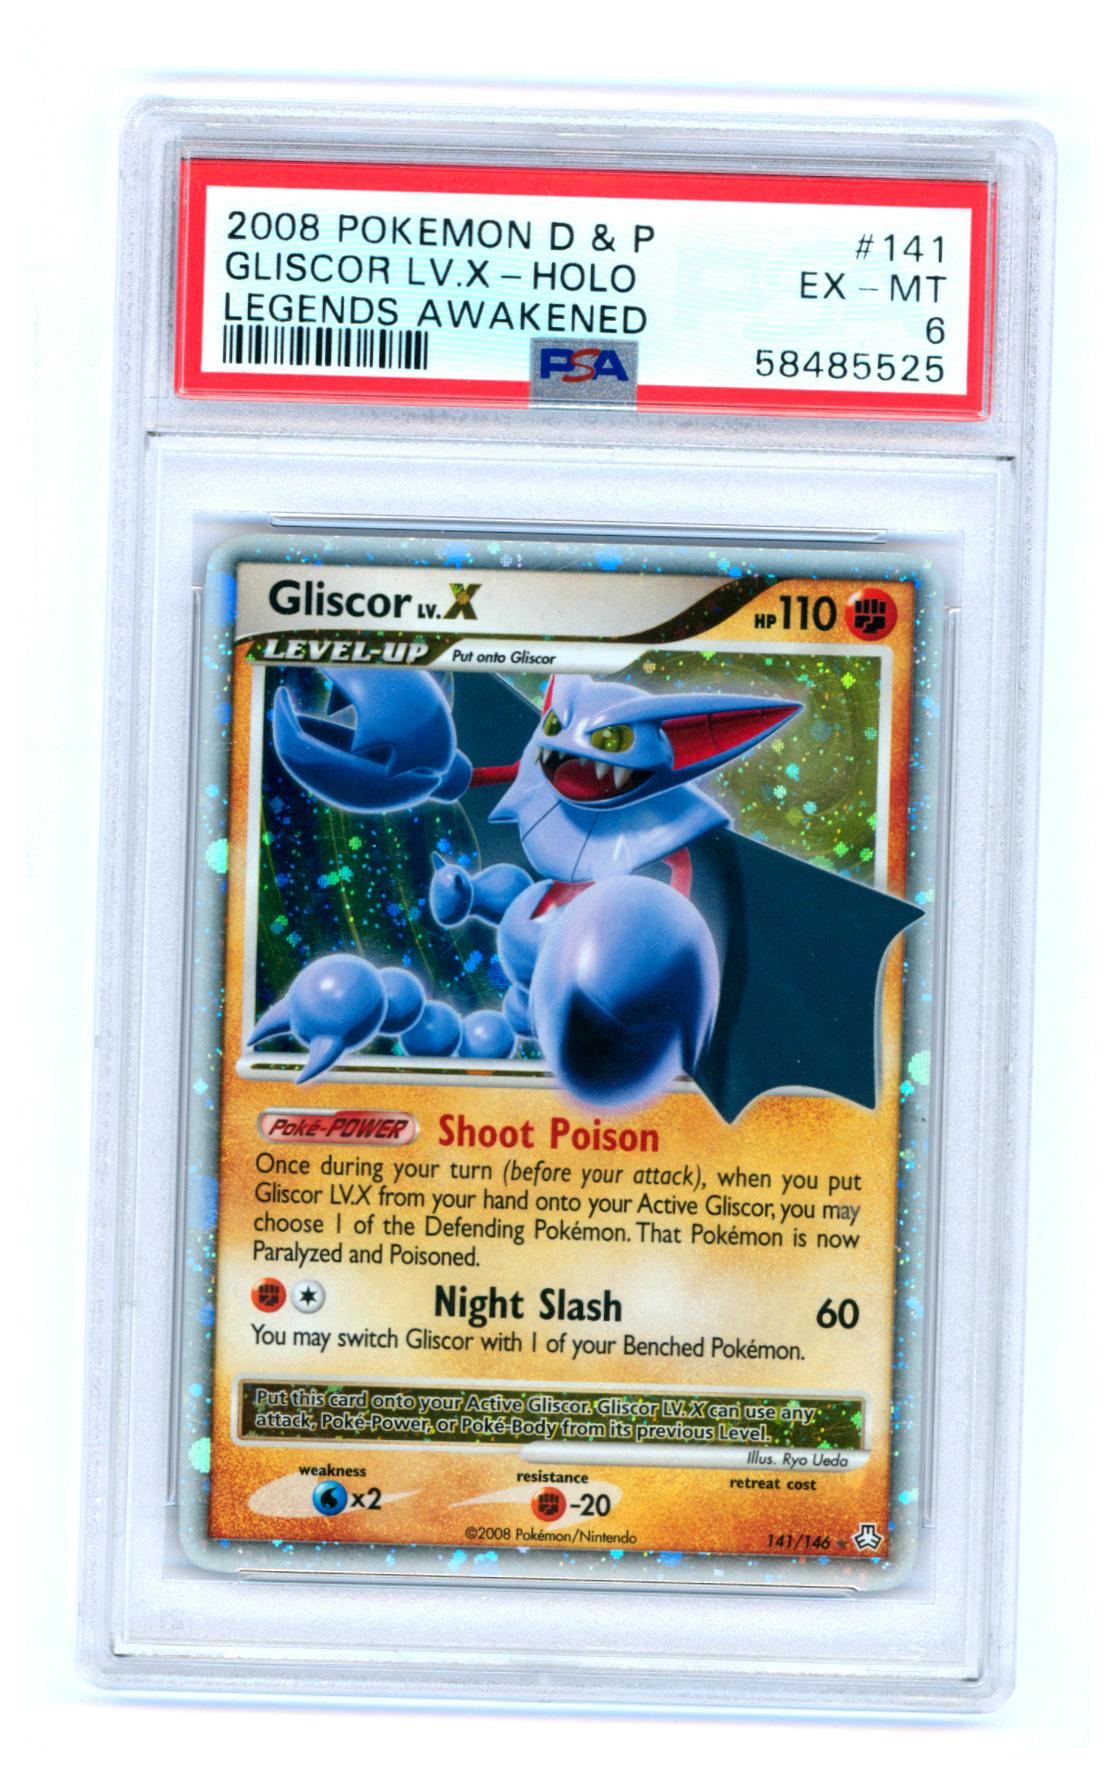 Gliscor Lv. X 141/146 - Legends Awakened - Holo - PSA 6 EX-MT - Pokémon